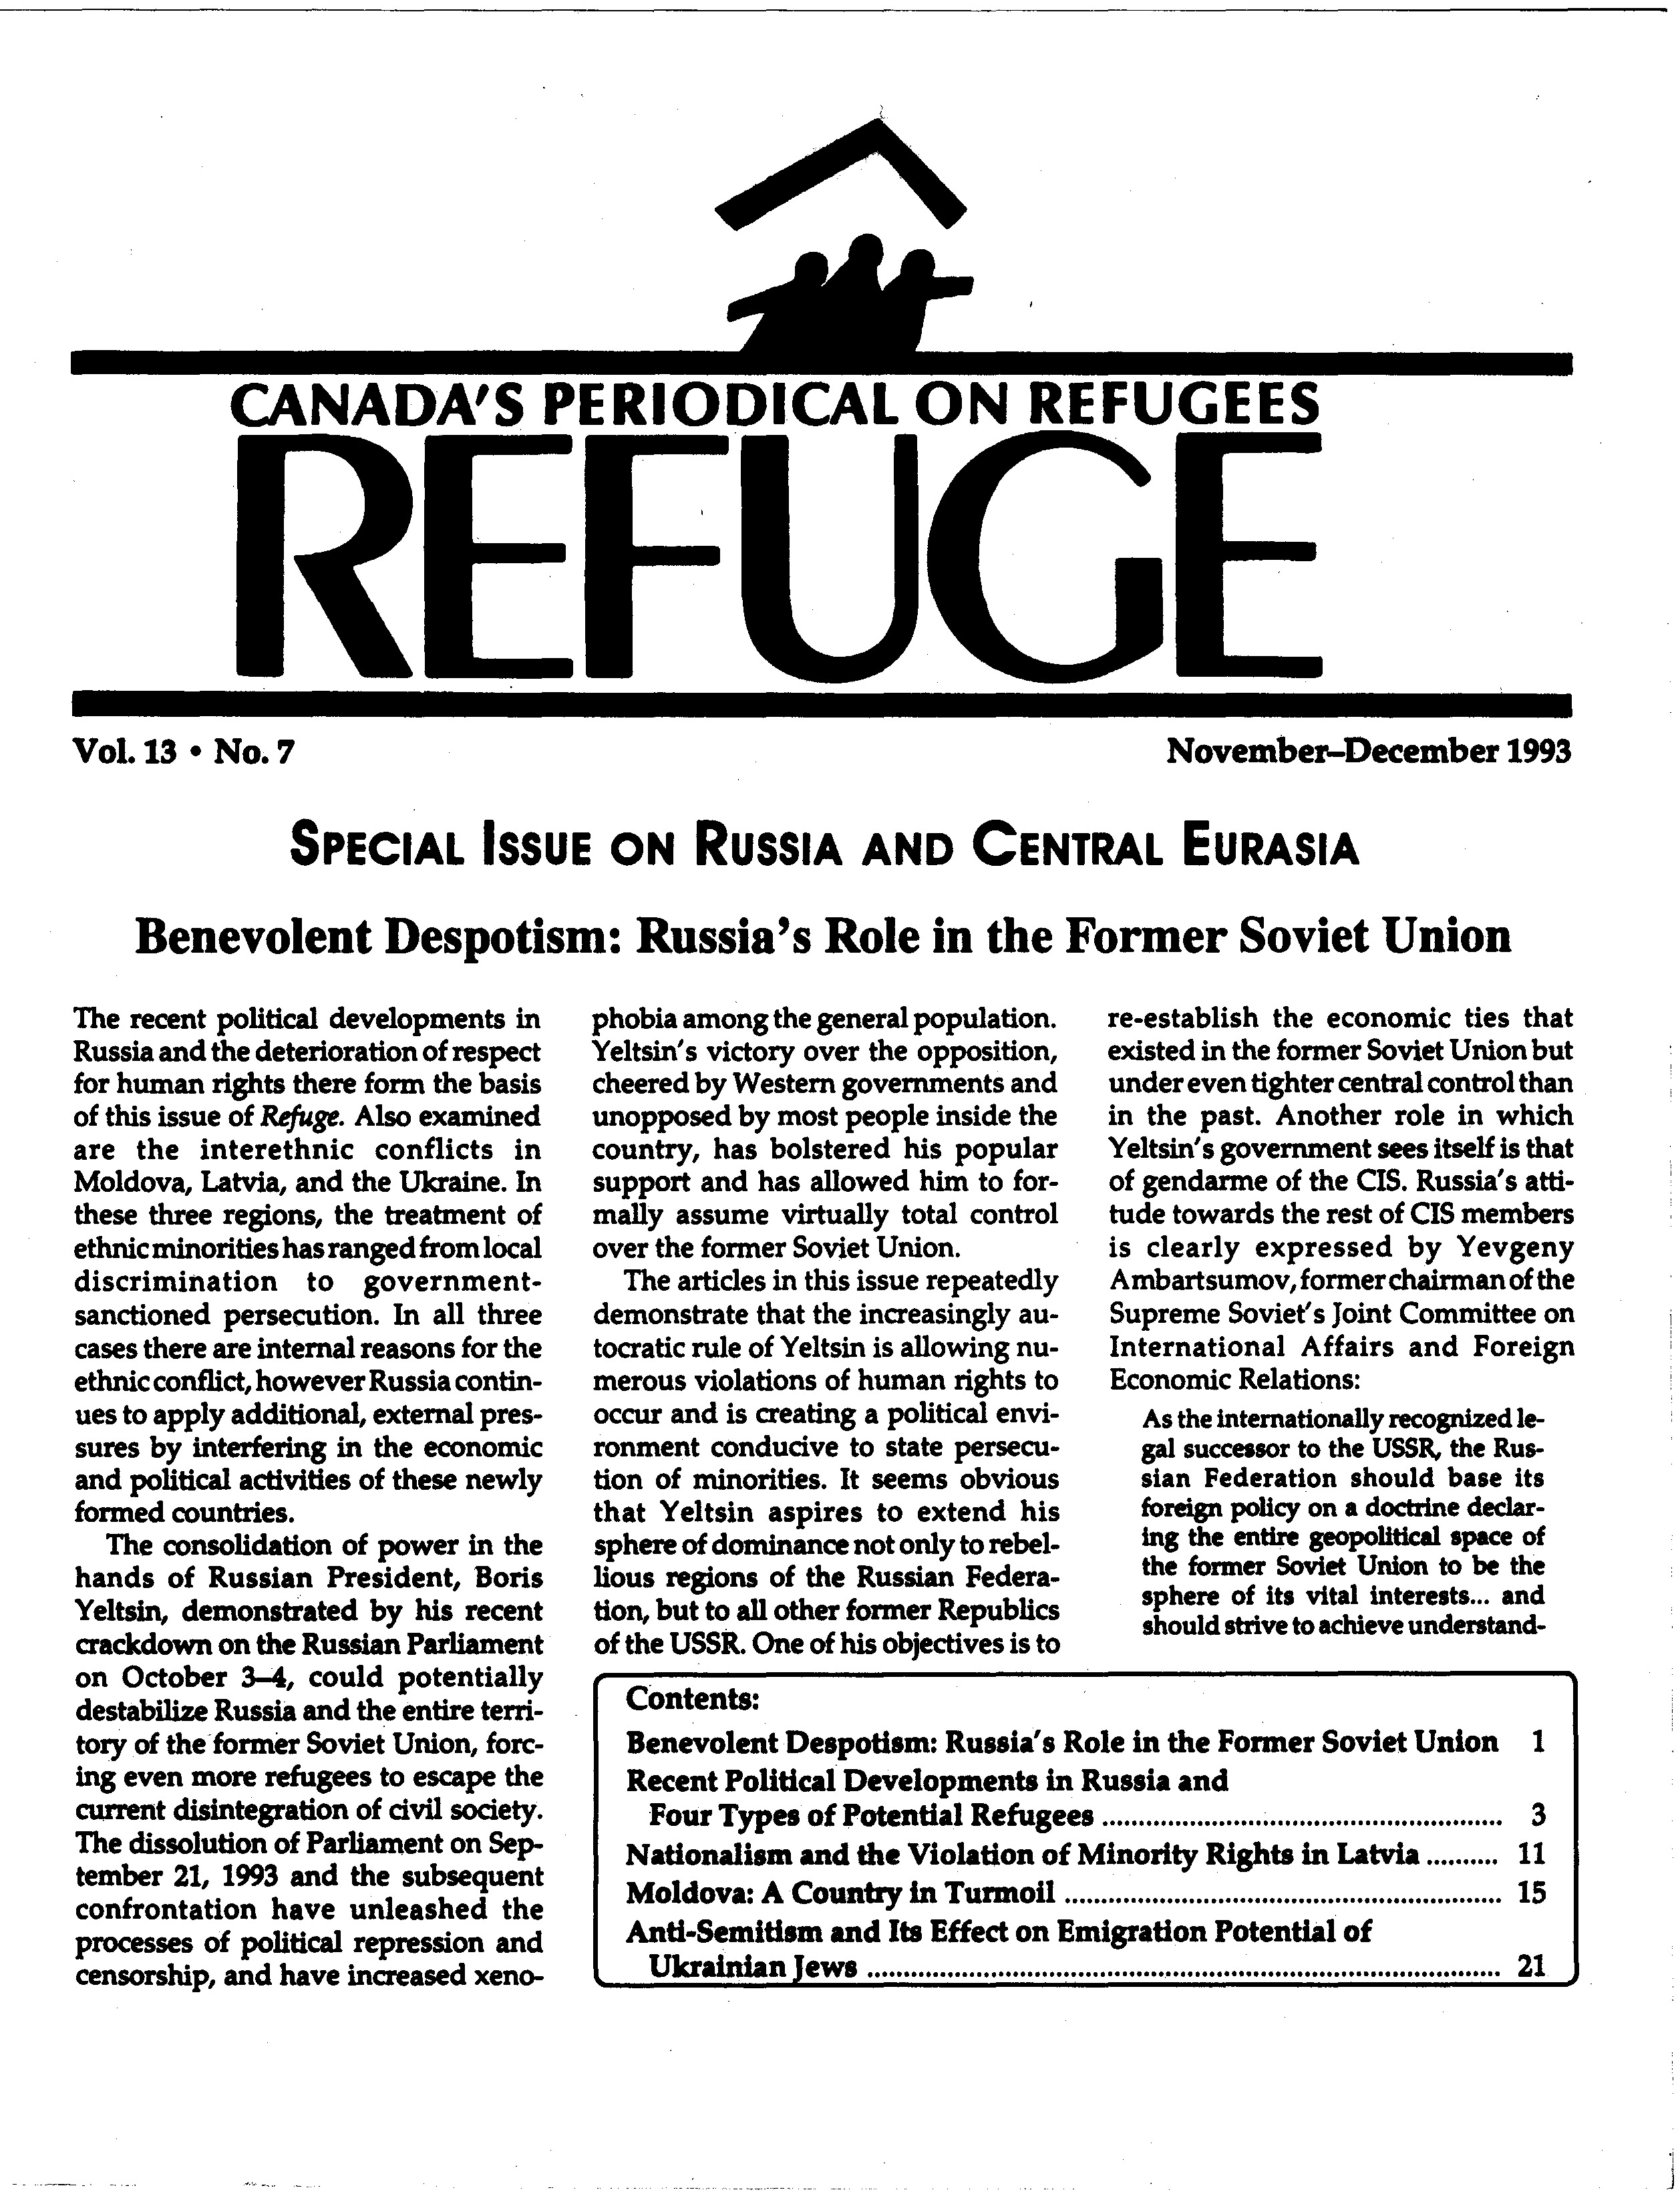 first page Refuge vol. 13.7 1993